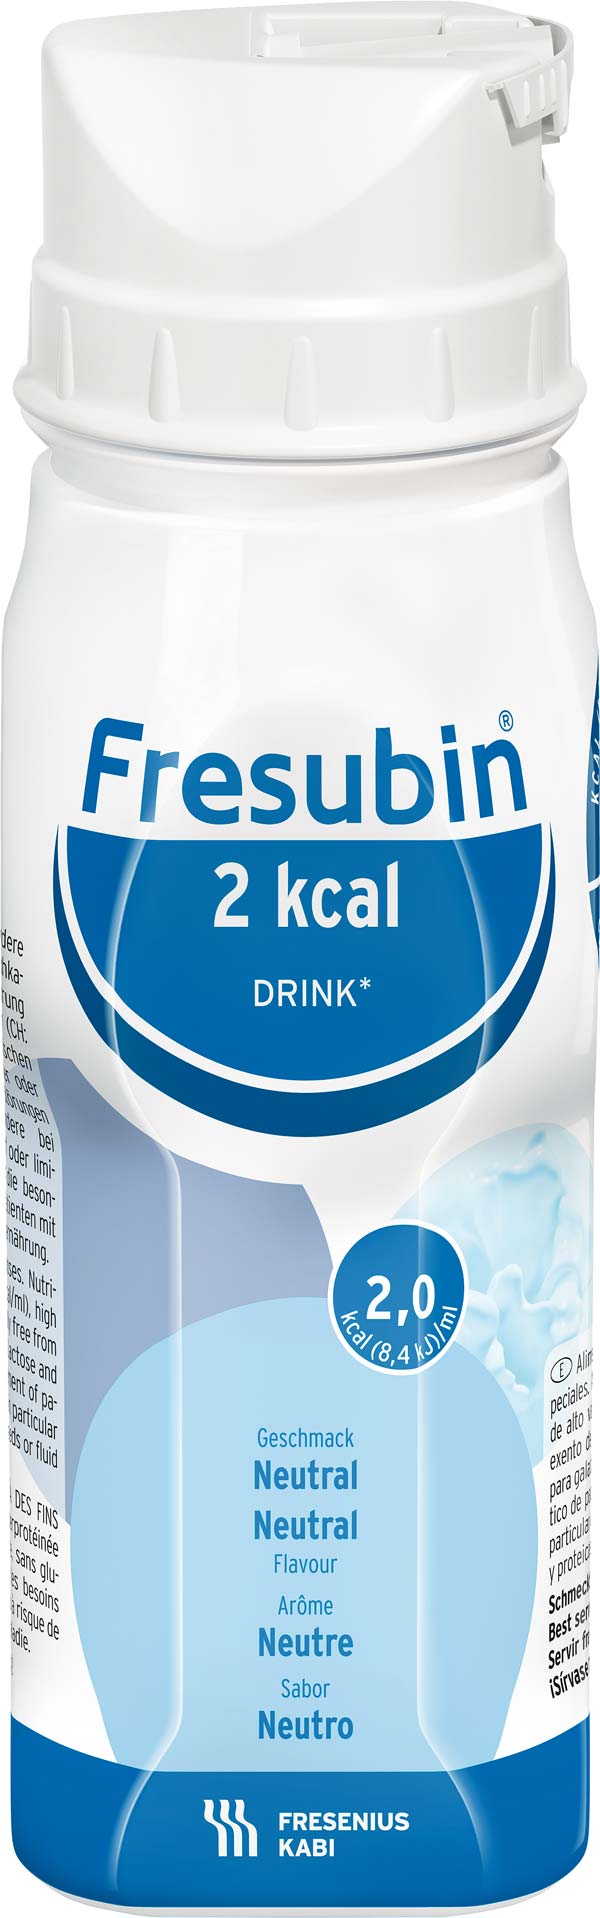 Fresubin 2kcal Drink Neutral (24x200ml) Trinknahrung - so schmeckt Lebensqualität unter Trinknahrung Shop > Fresenius-Kabi